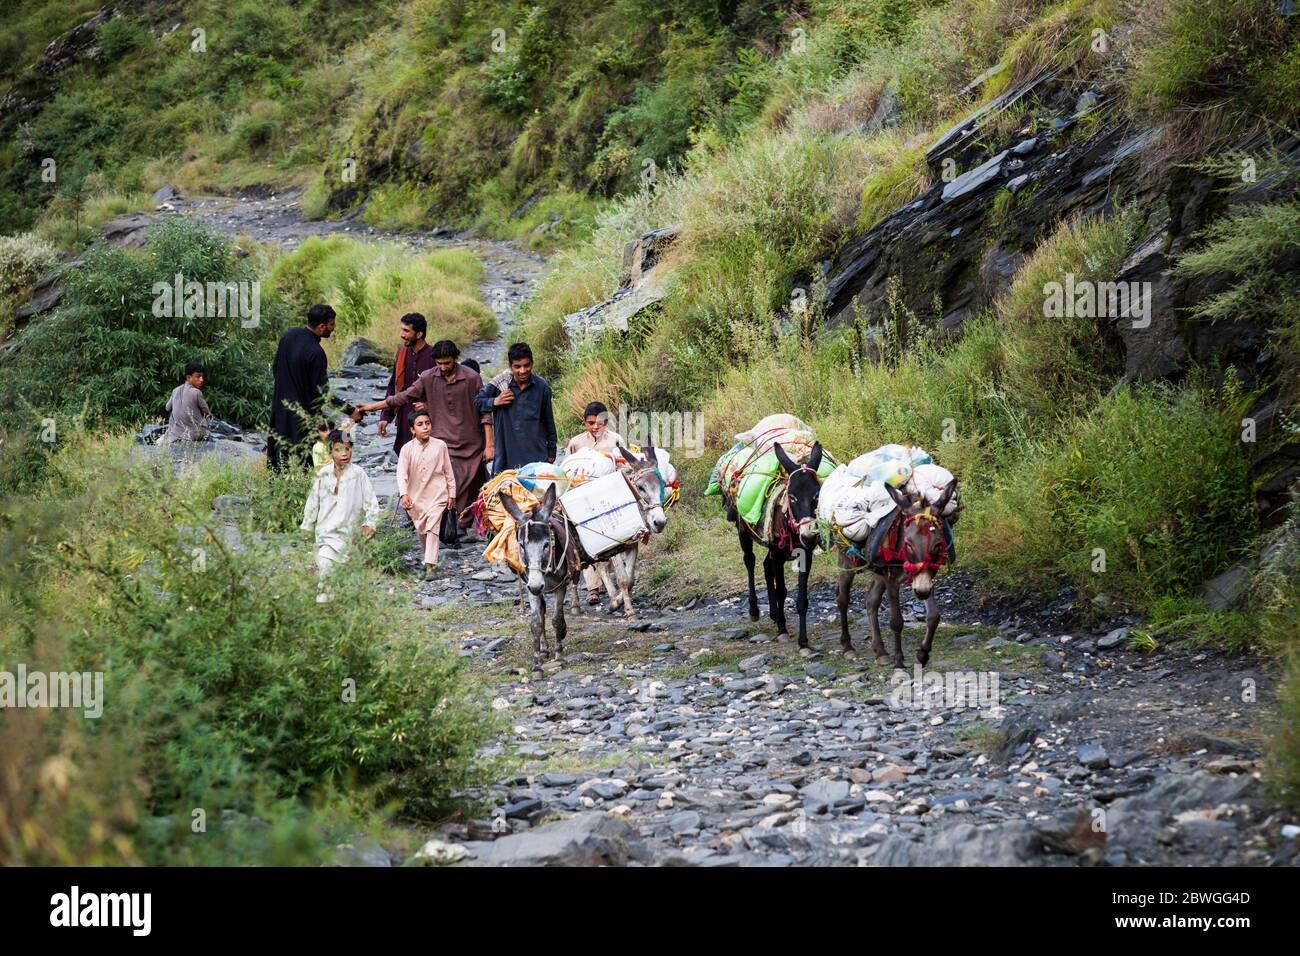 Donkeys and local people, Elum Mountain trekking path, Marghuzar, Swat, Khyber Pakhtunkhwa Province, Pakistan, South Asia, Asia Stock Photo